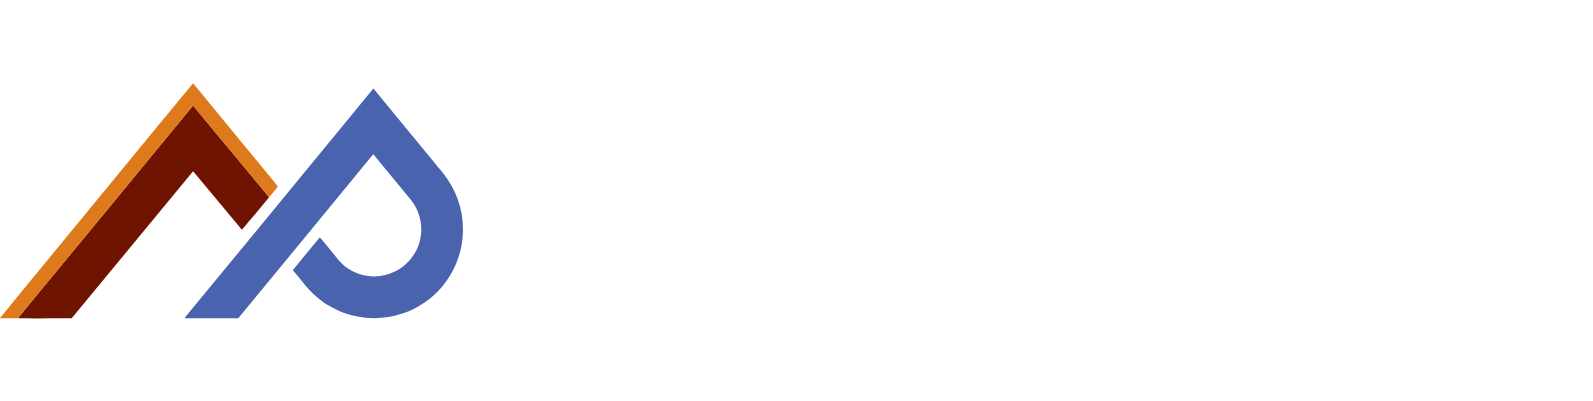 NewAmsterdam Pharma Company logo grand pour les fonds sombres (PNG transparent)